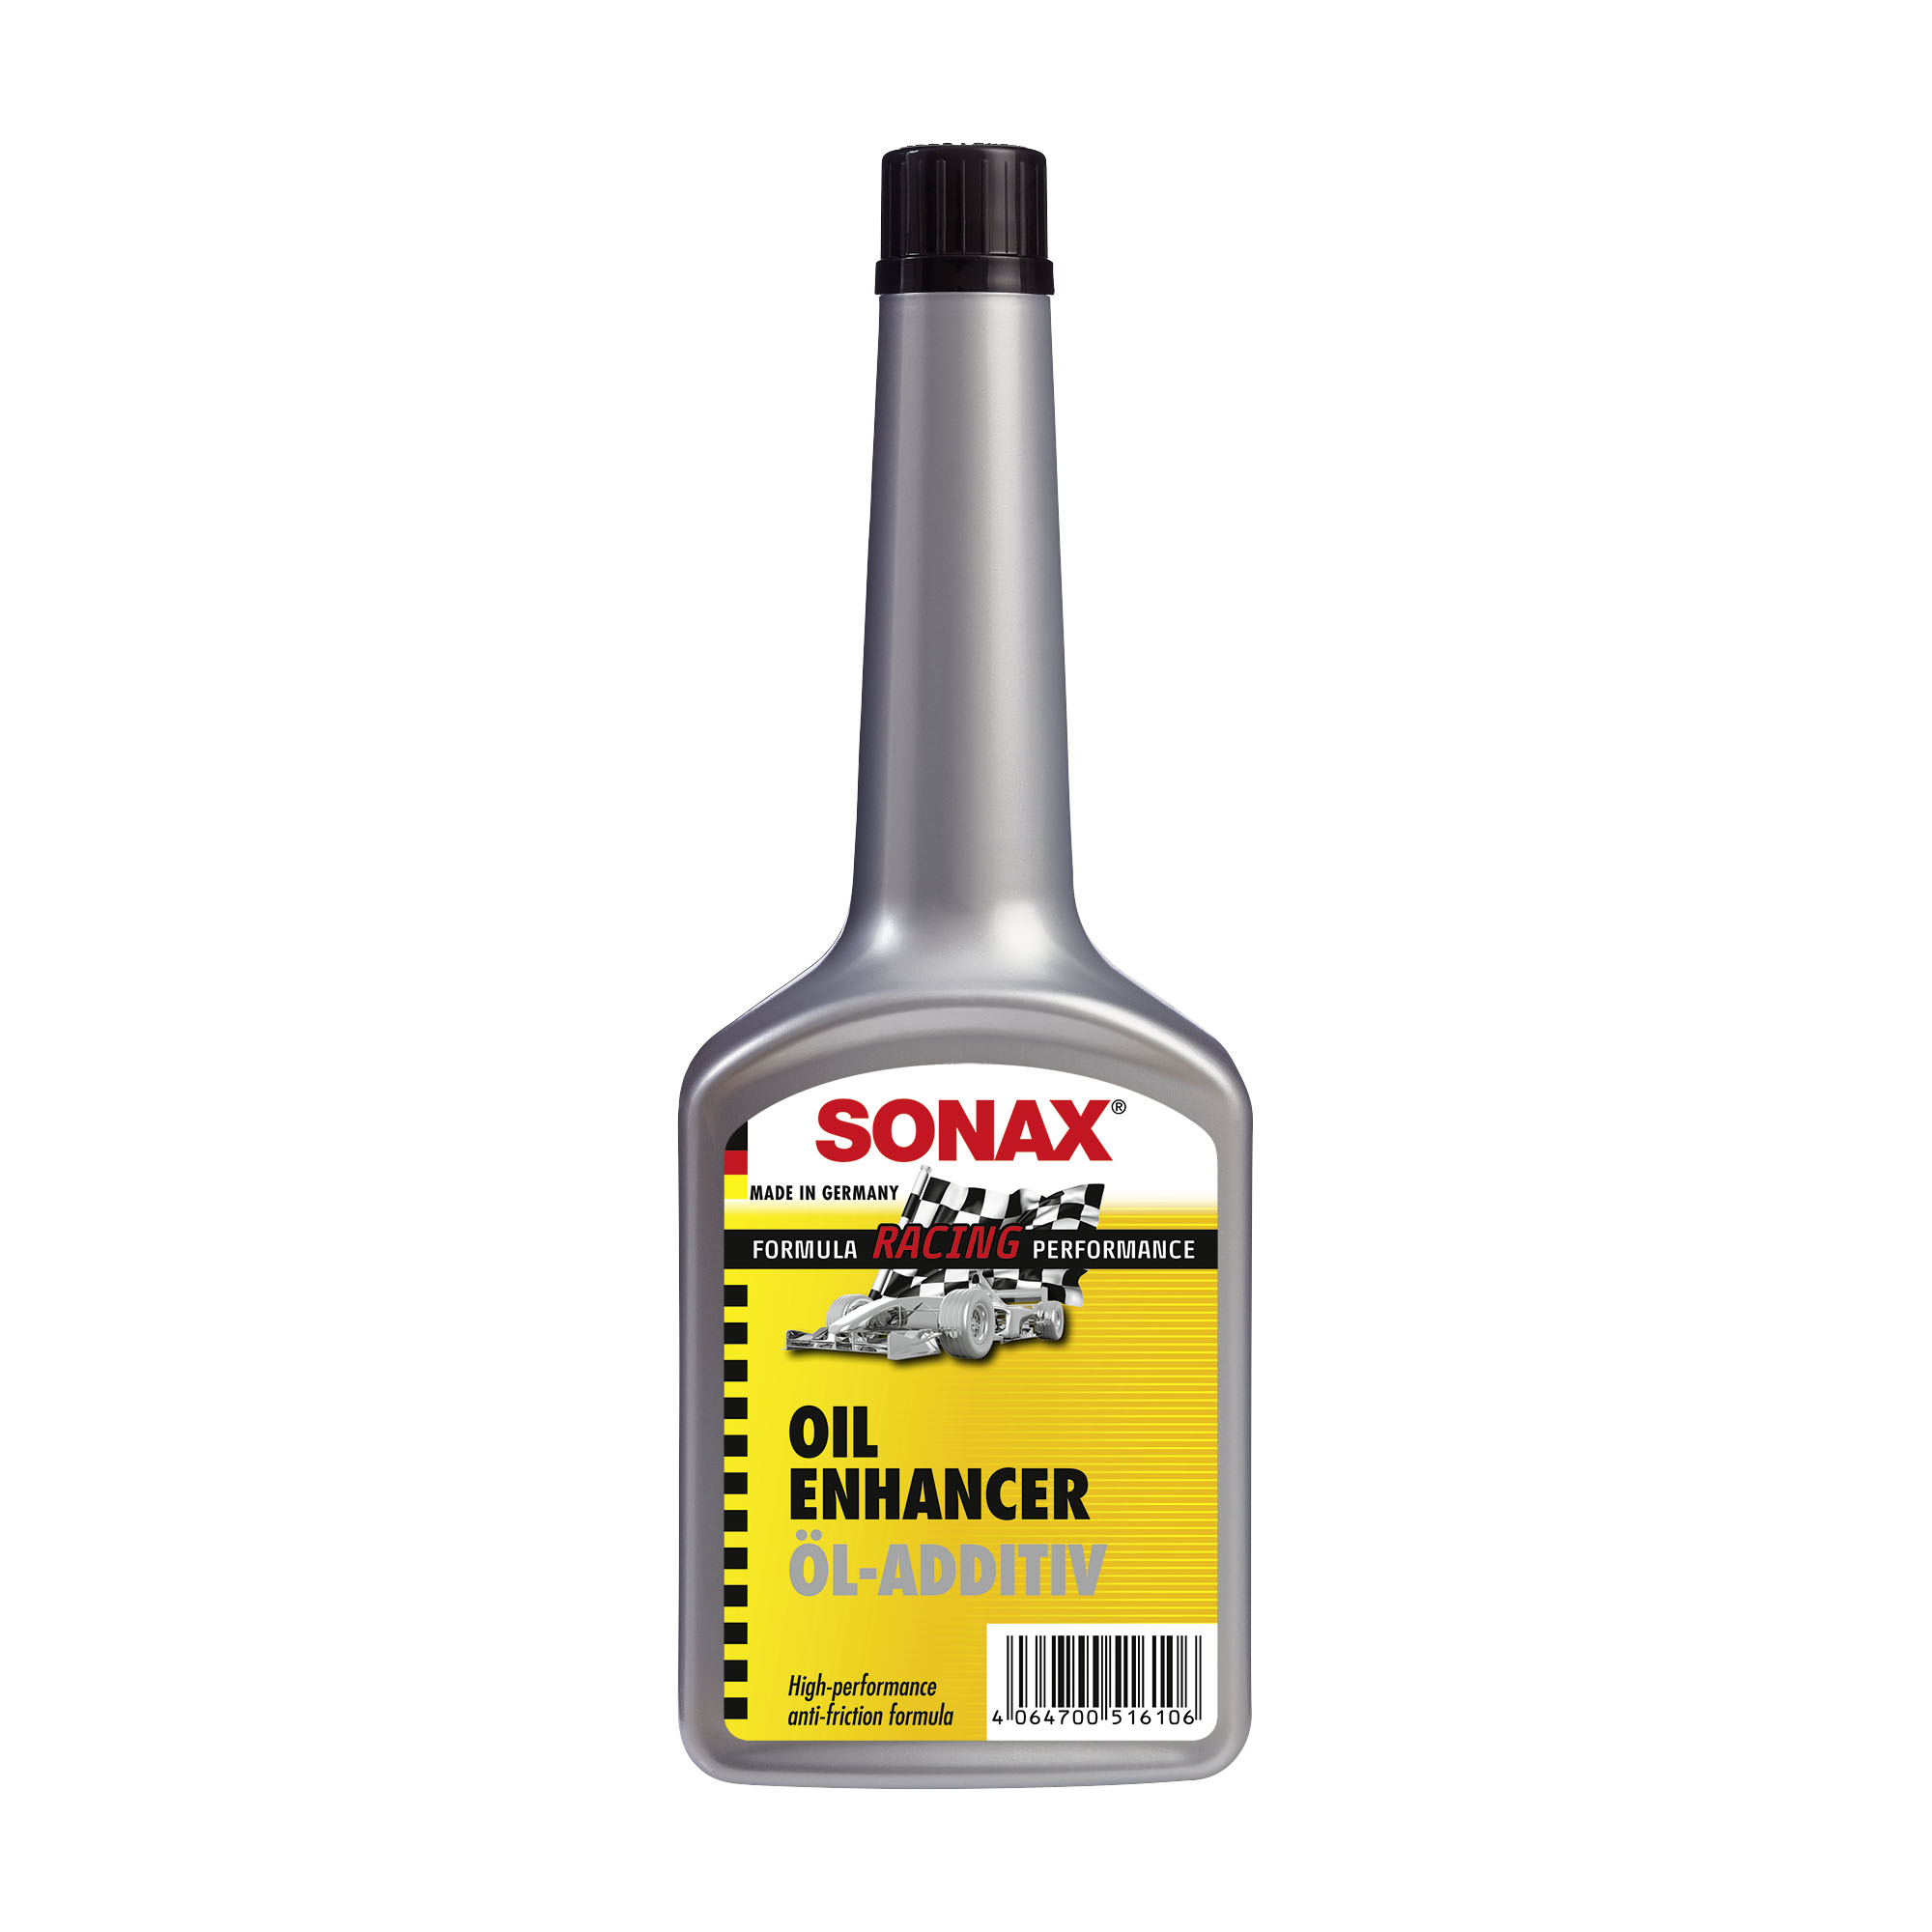 Sonax Oil Enhancer